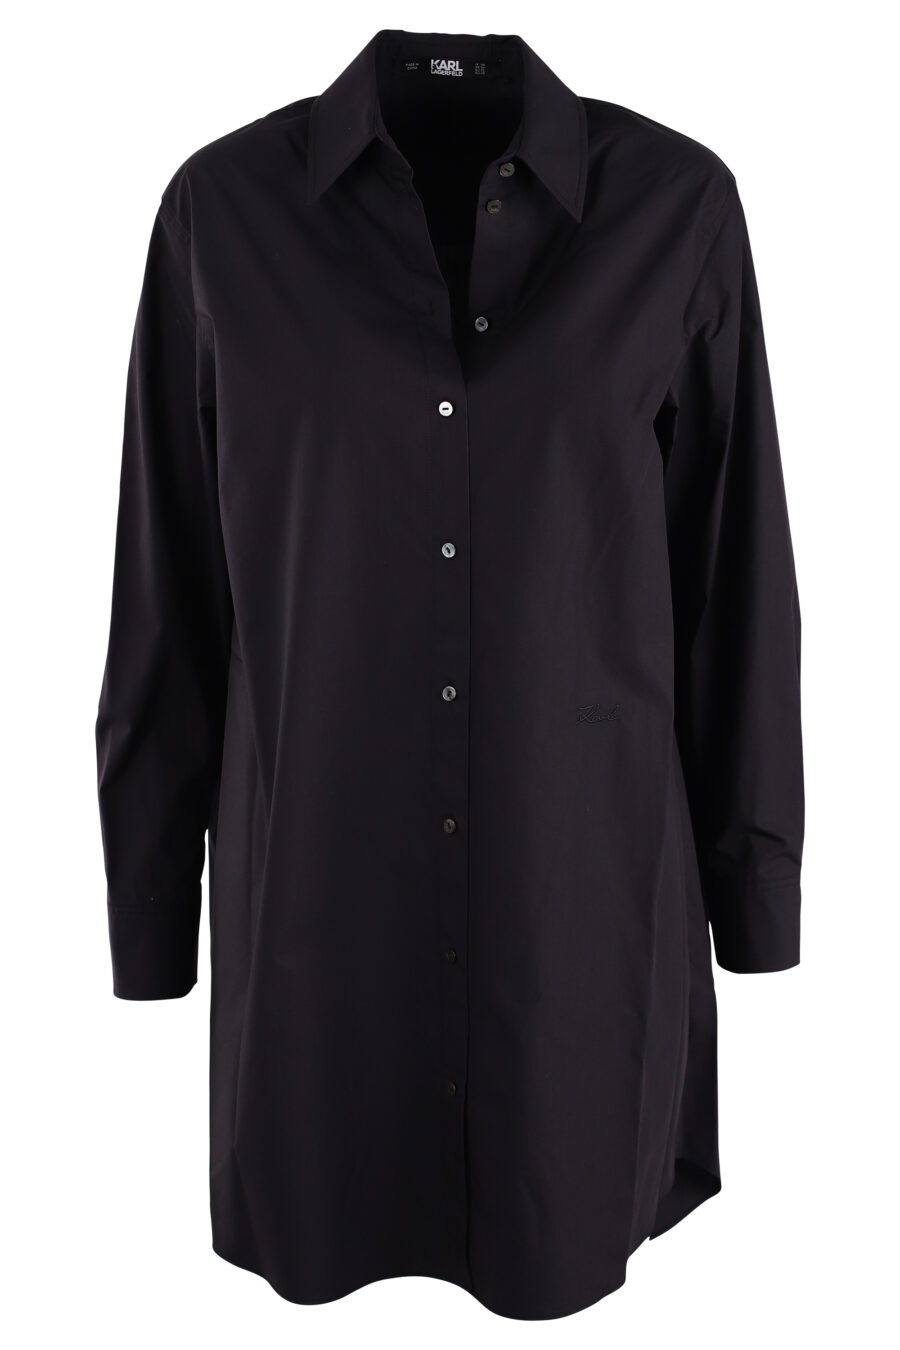 Camisa negra larga con logo strass - IMG 3081